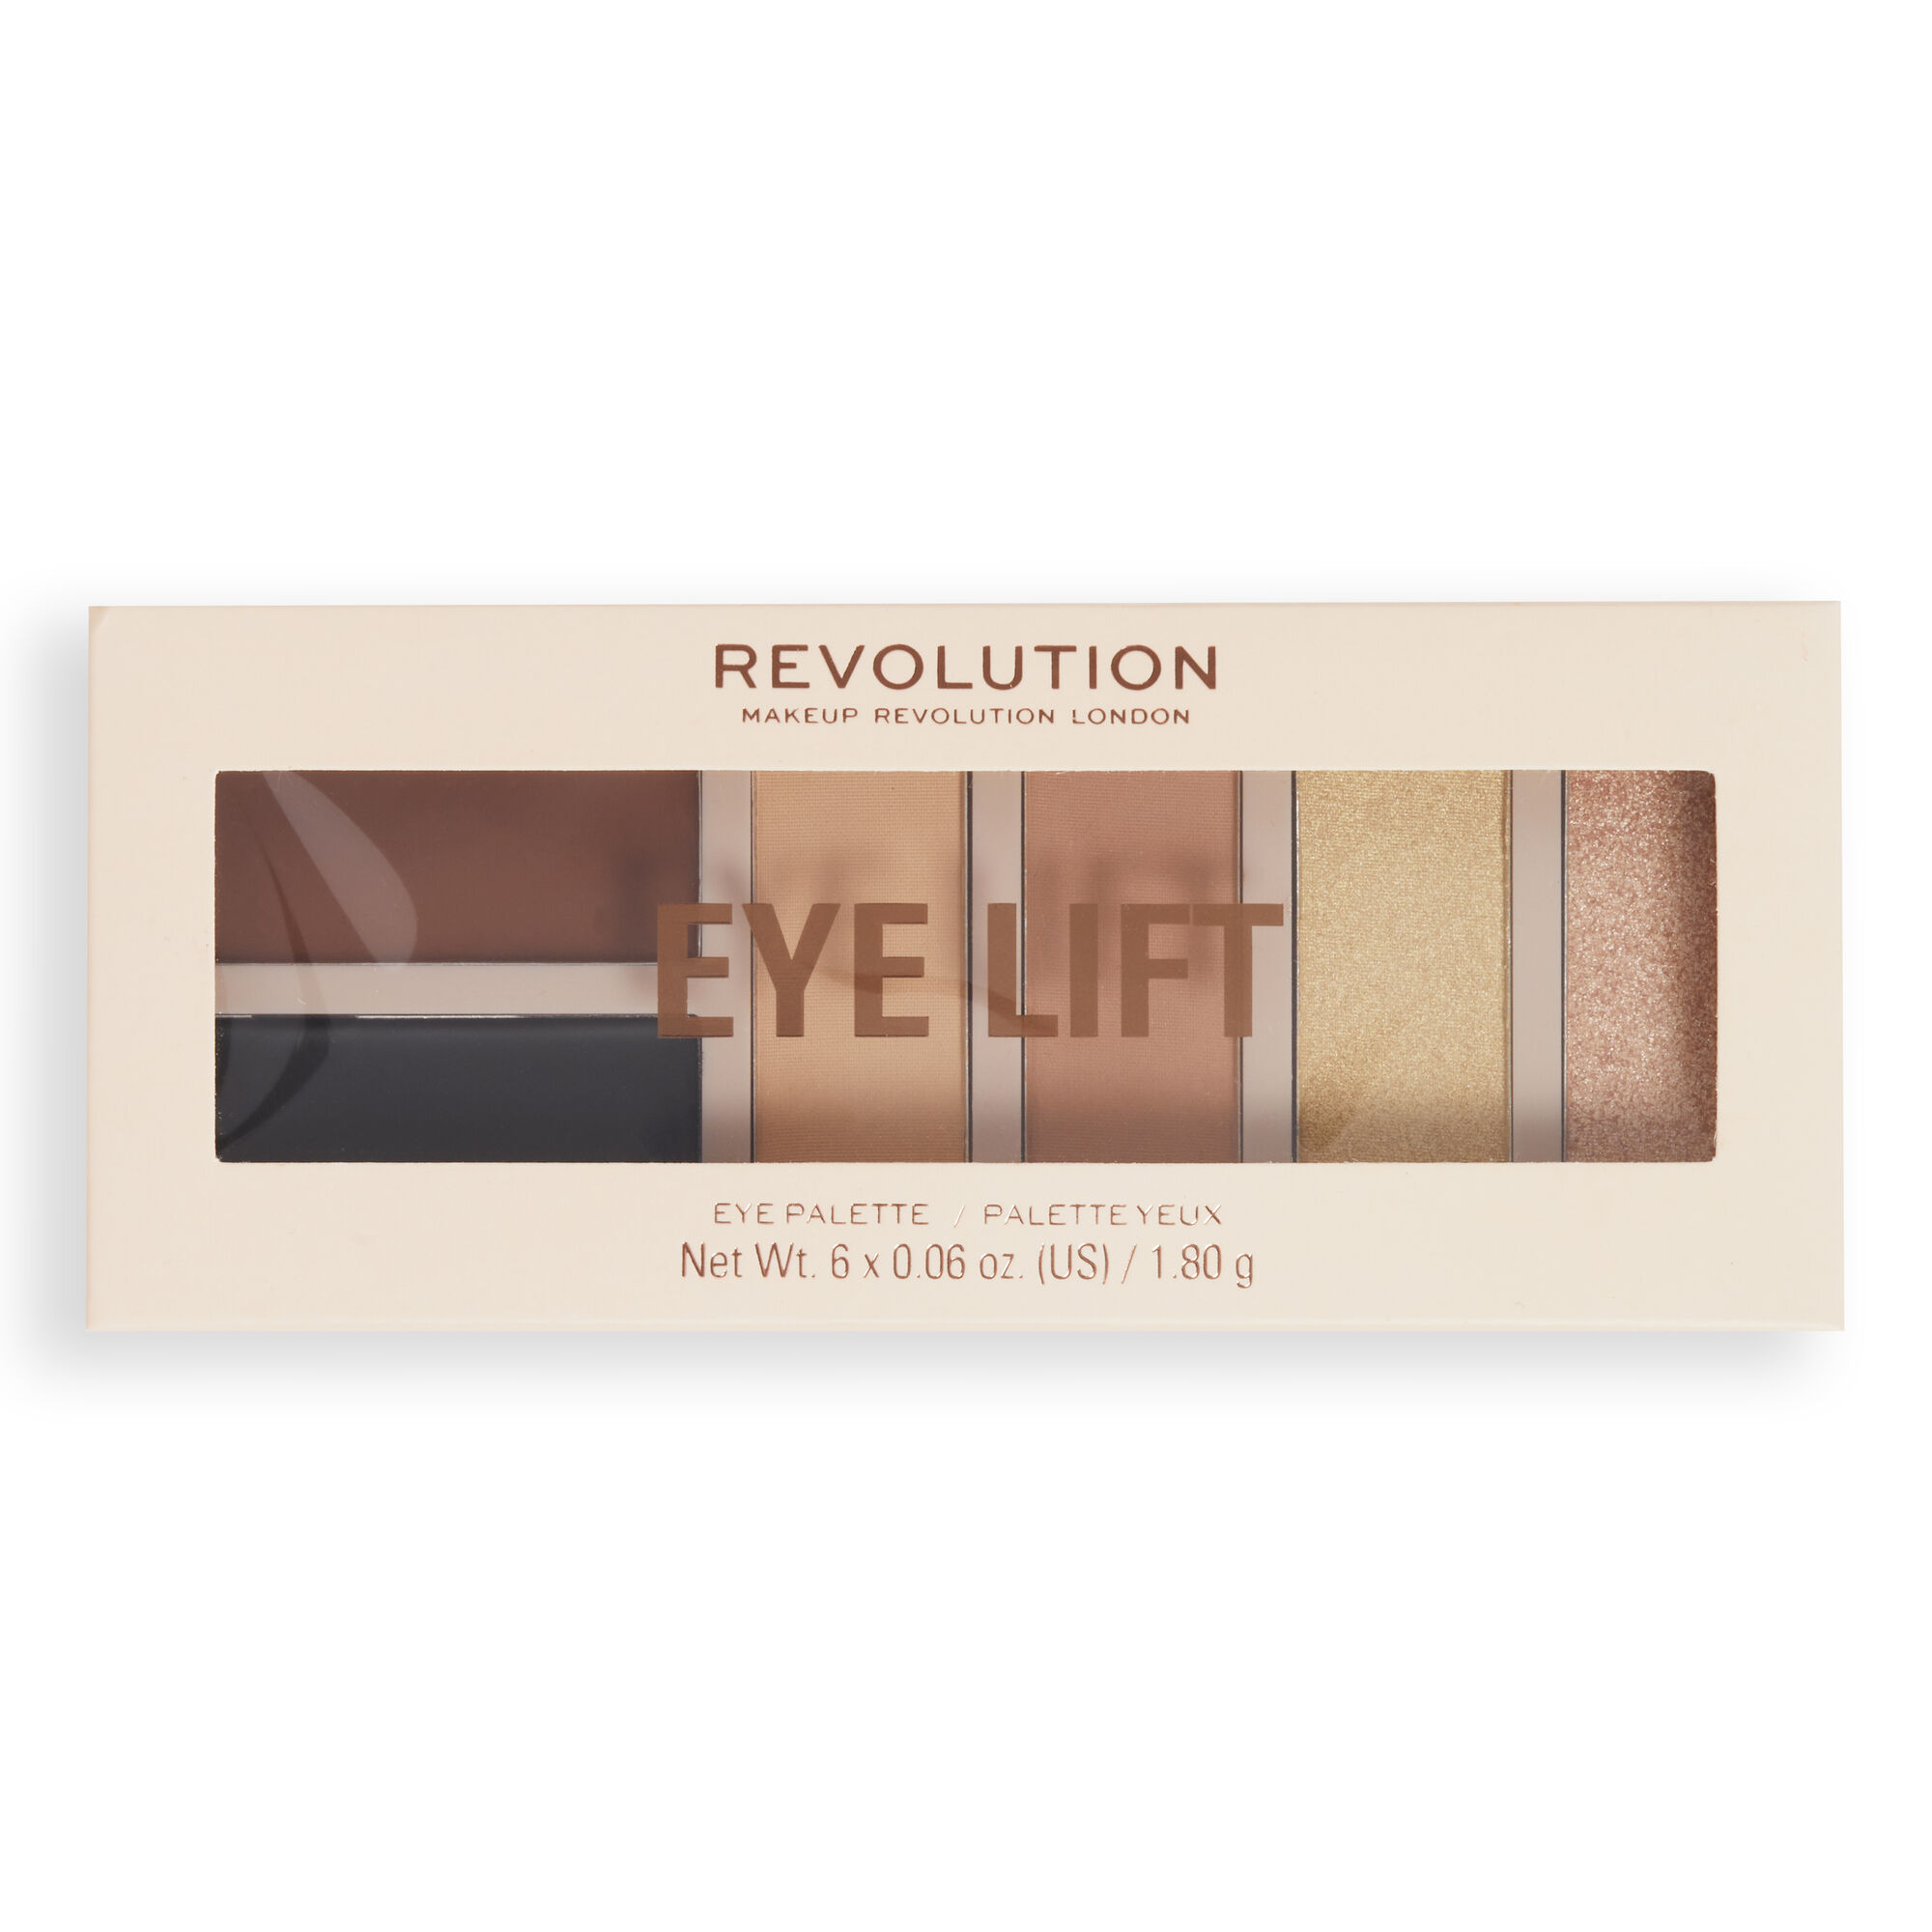 Палетка Revolution Makeup для макияжа глаз: тени-бронзер подводка тени Eye Lift Palette astra тени для глаз pure beauty палетка